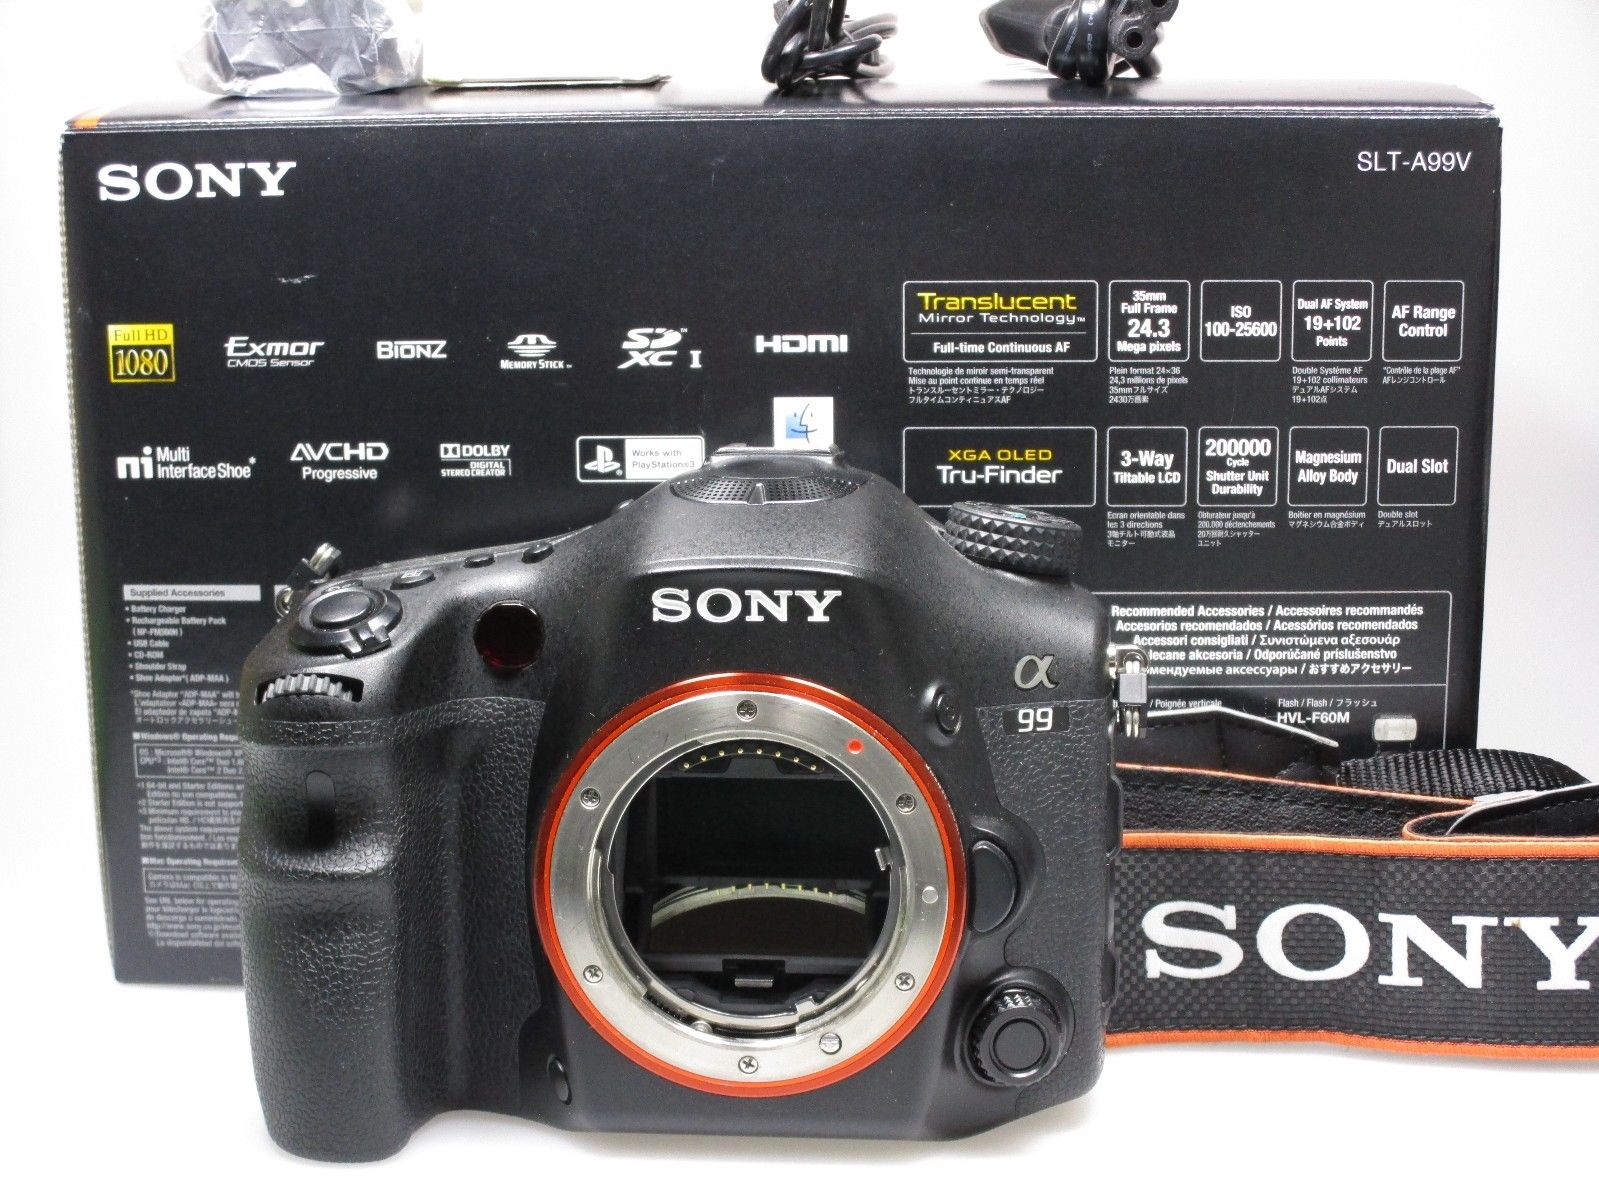 Sony Alpha SLT-A99V 24.3 MP SLR-Digitalkamera - wenig gebrauchte 1618 Auslösung.